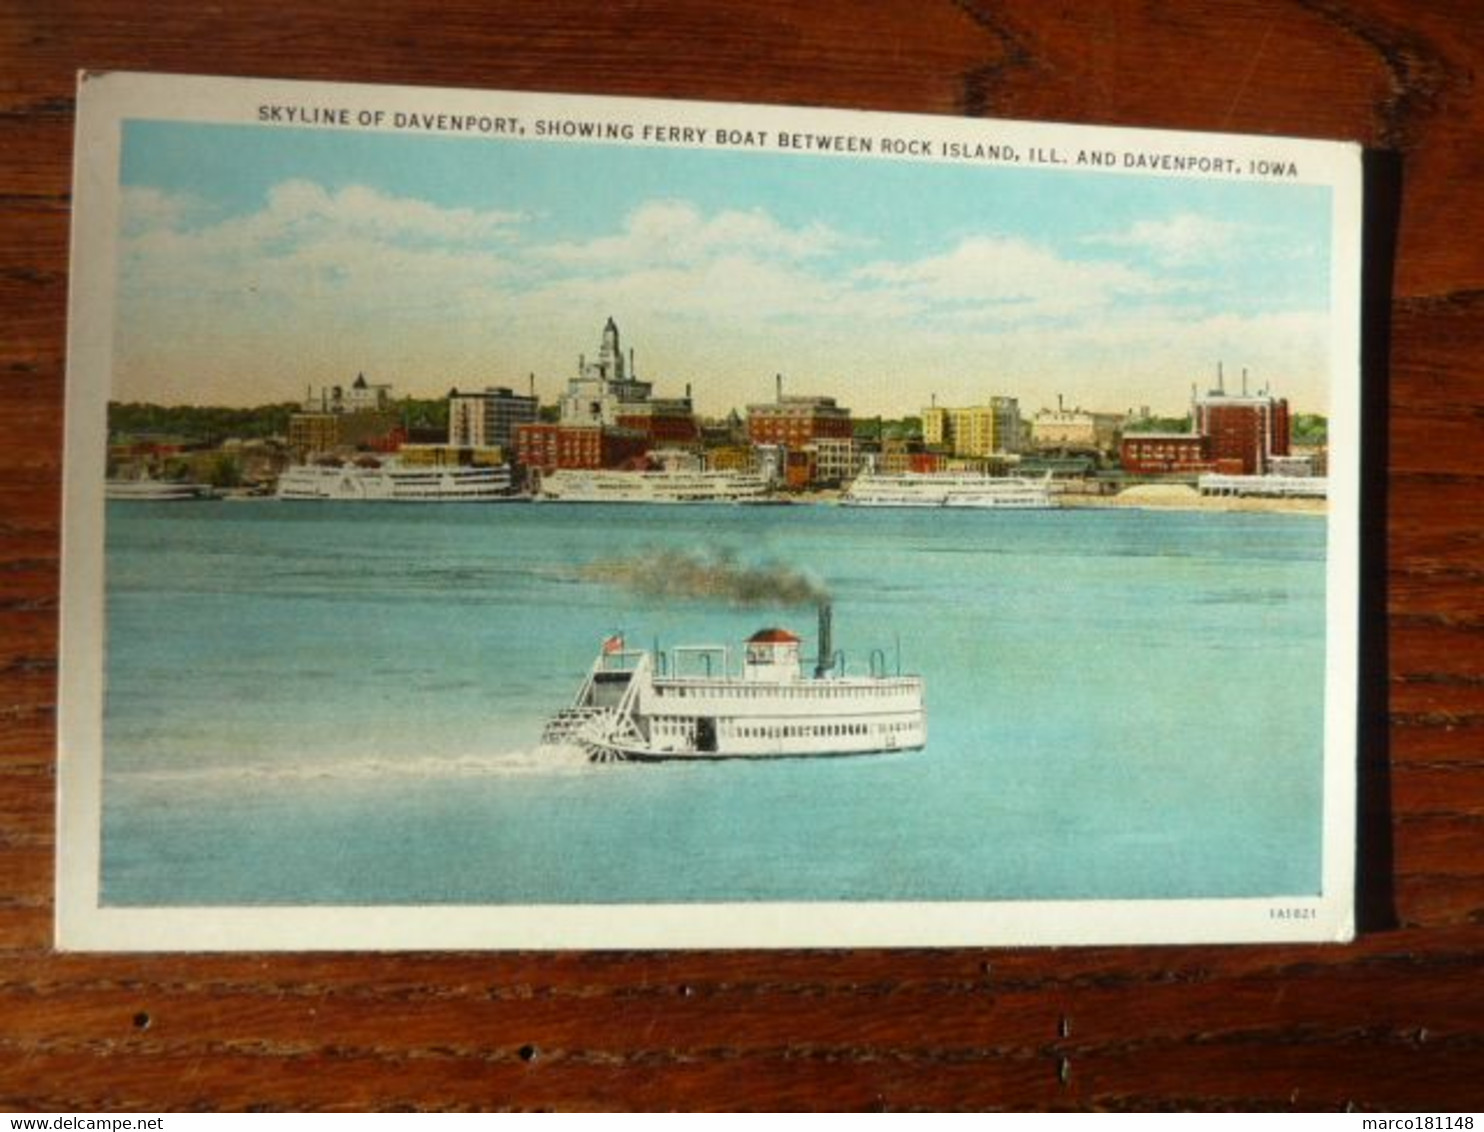 Skyline Of Davenport, Showing Ferry Boat Between Rock Island, Illinois And Davenport, Iowa - Davenport